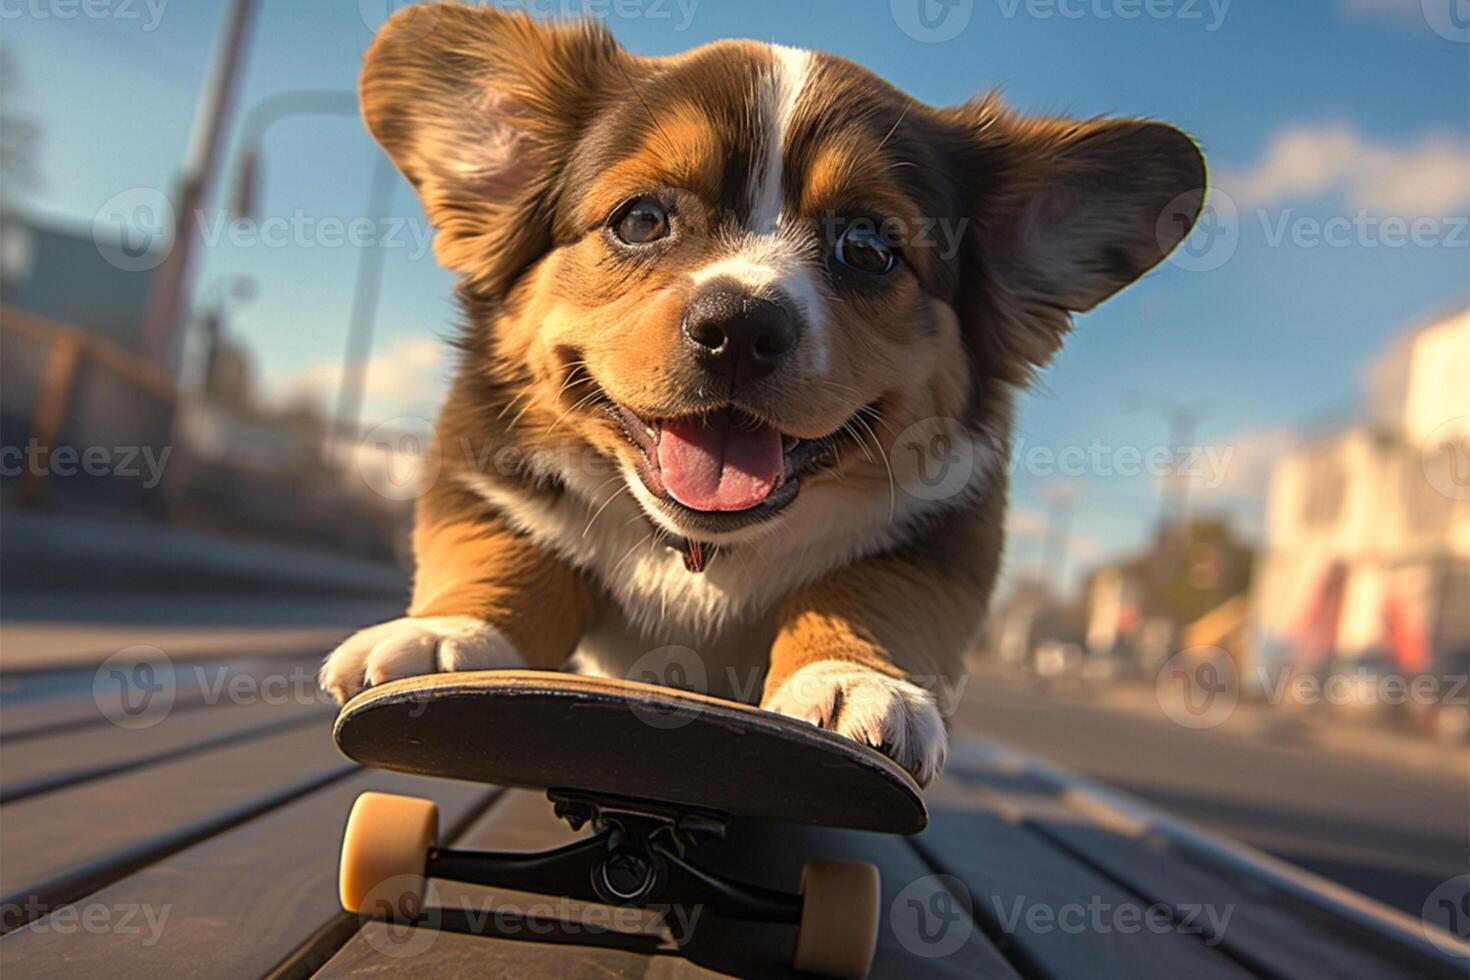 AI generated Urban charm Adorable pup masters skateboard, bringing joy to city life photo